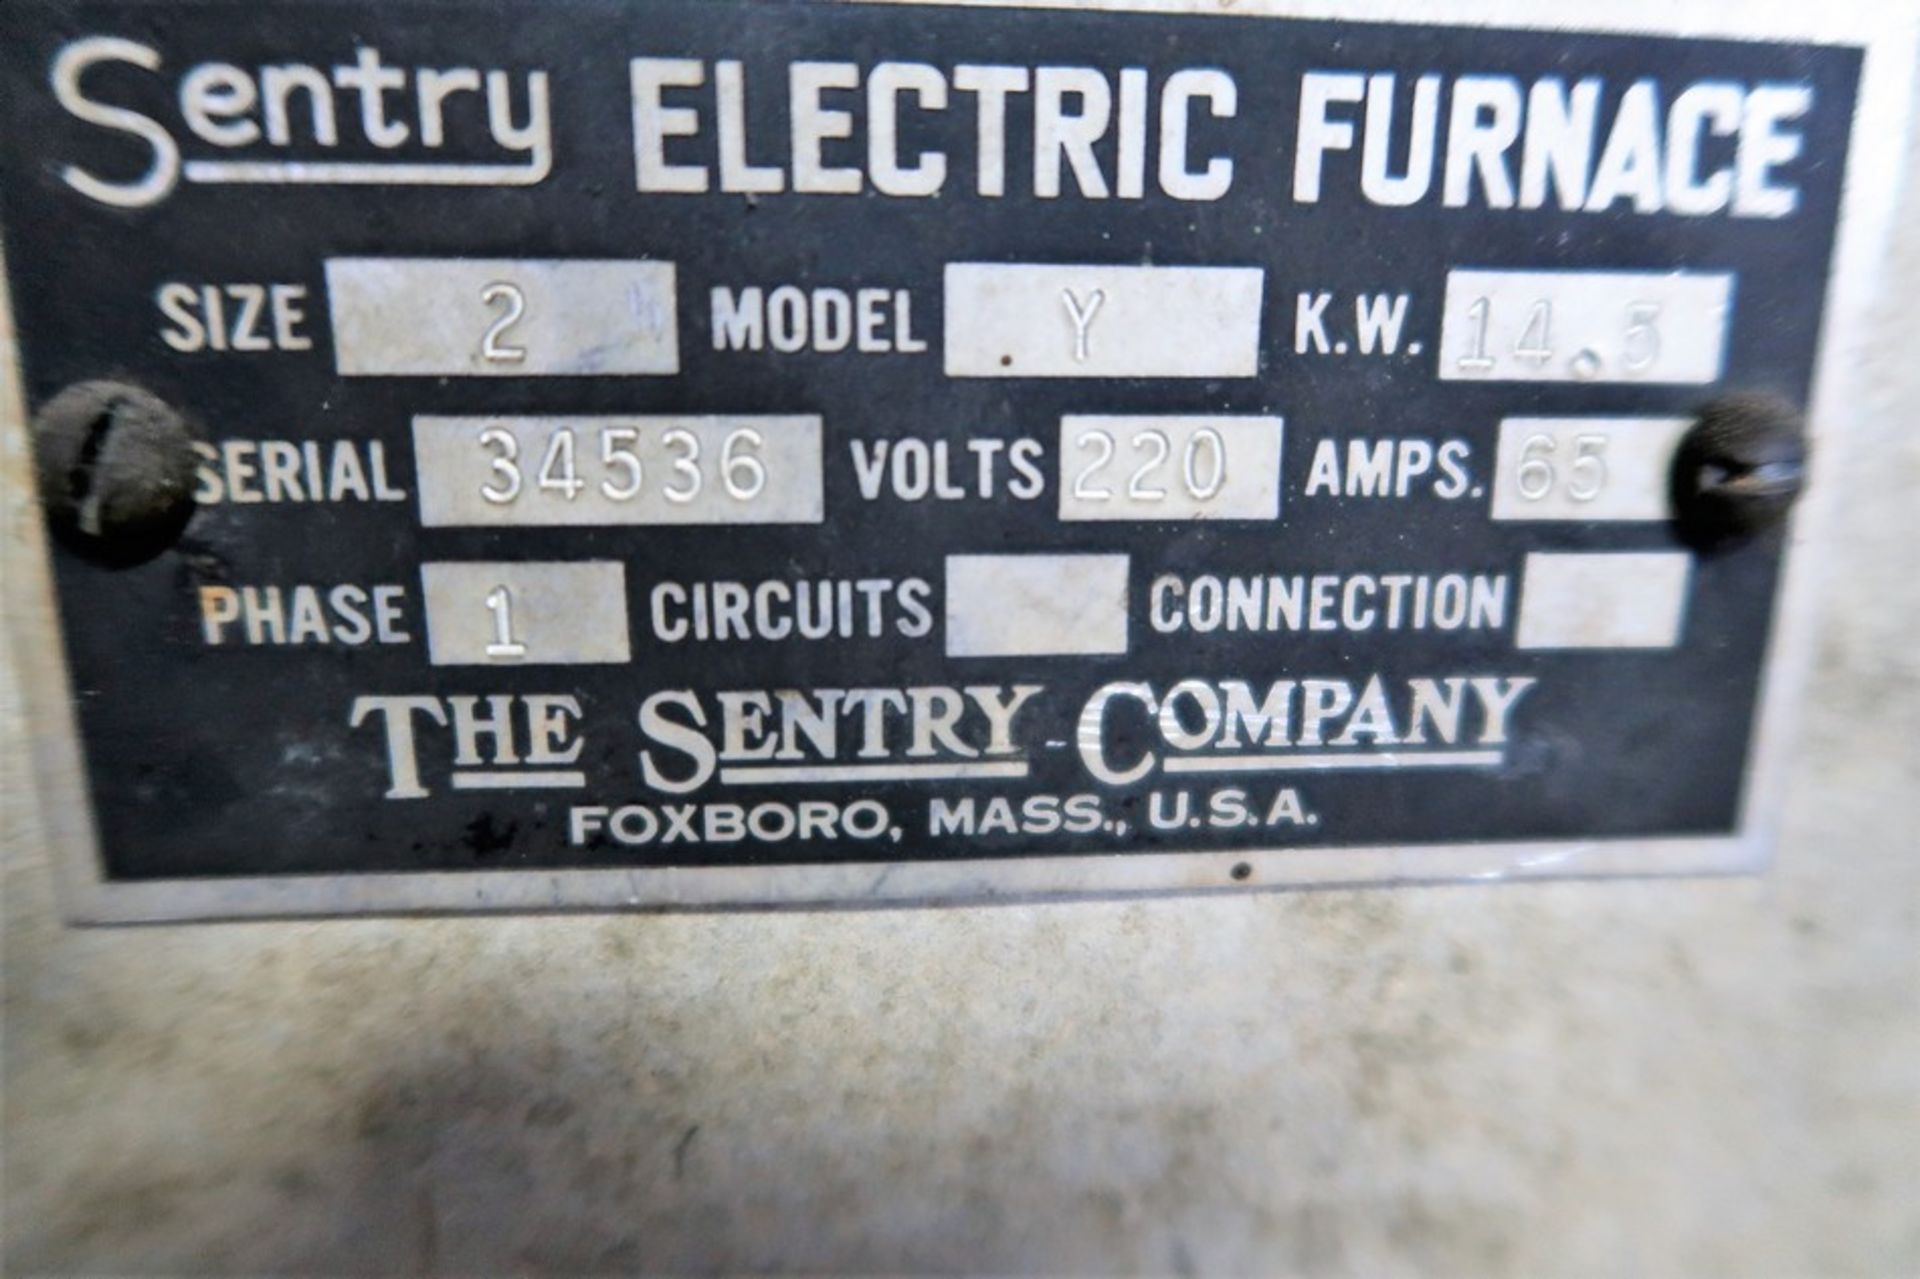 Sentry Electric Furnace Model Y, S/N: 34536 - Image 2 of 3